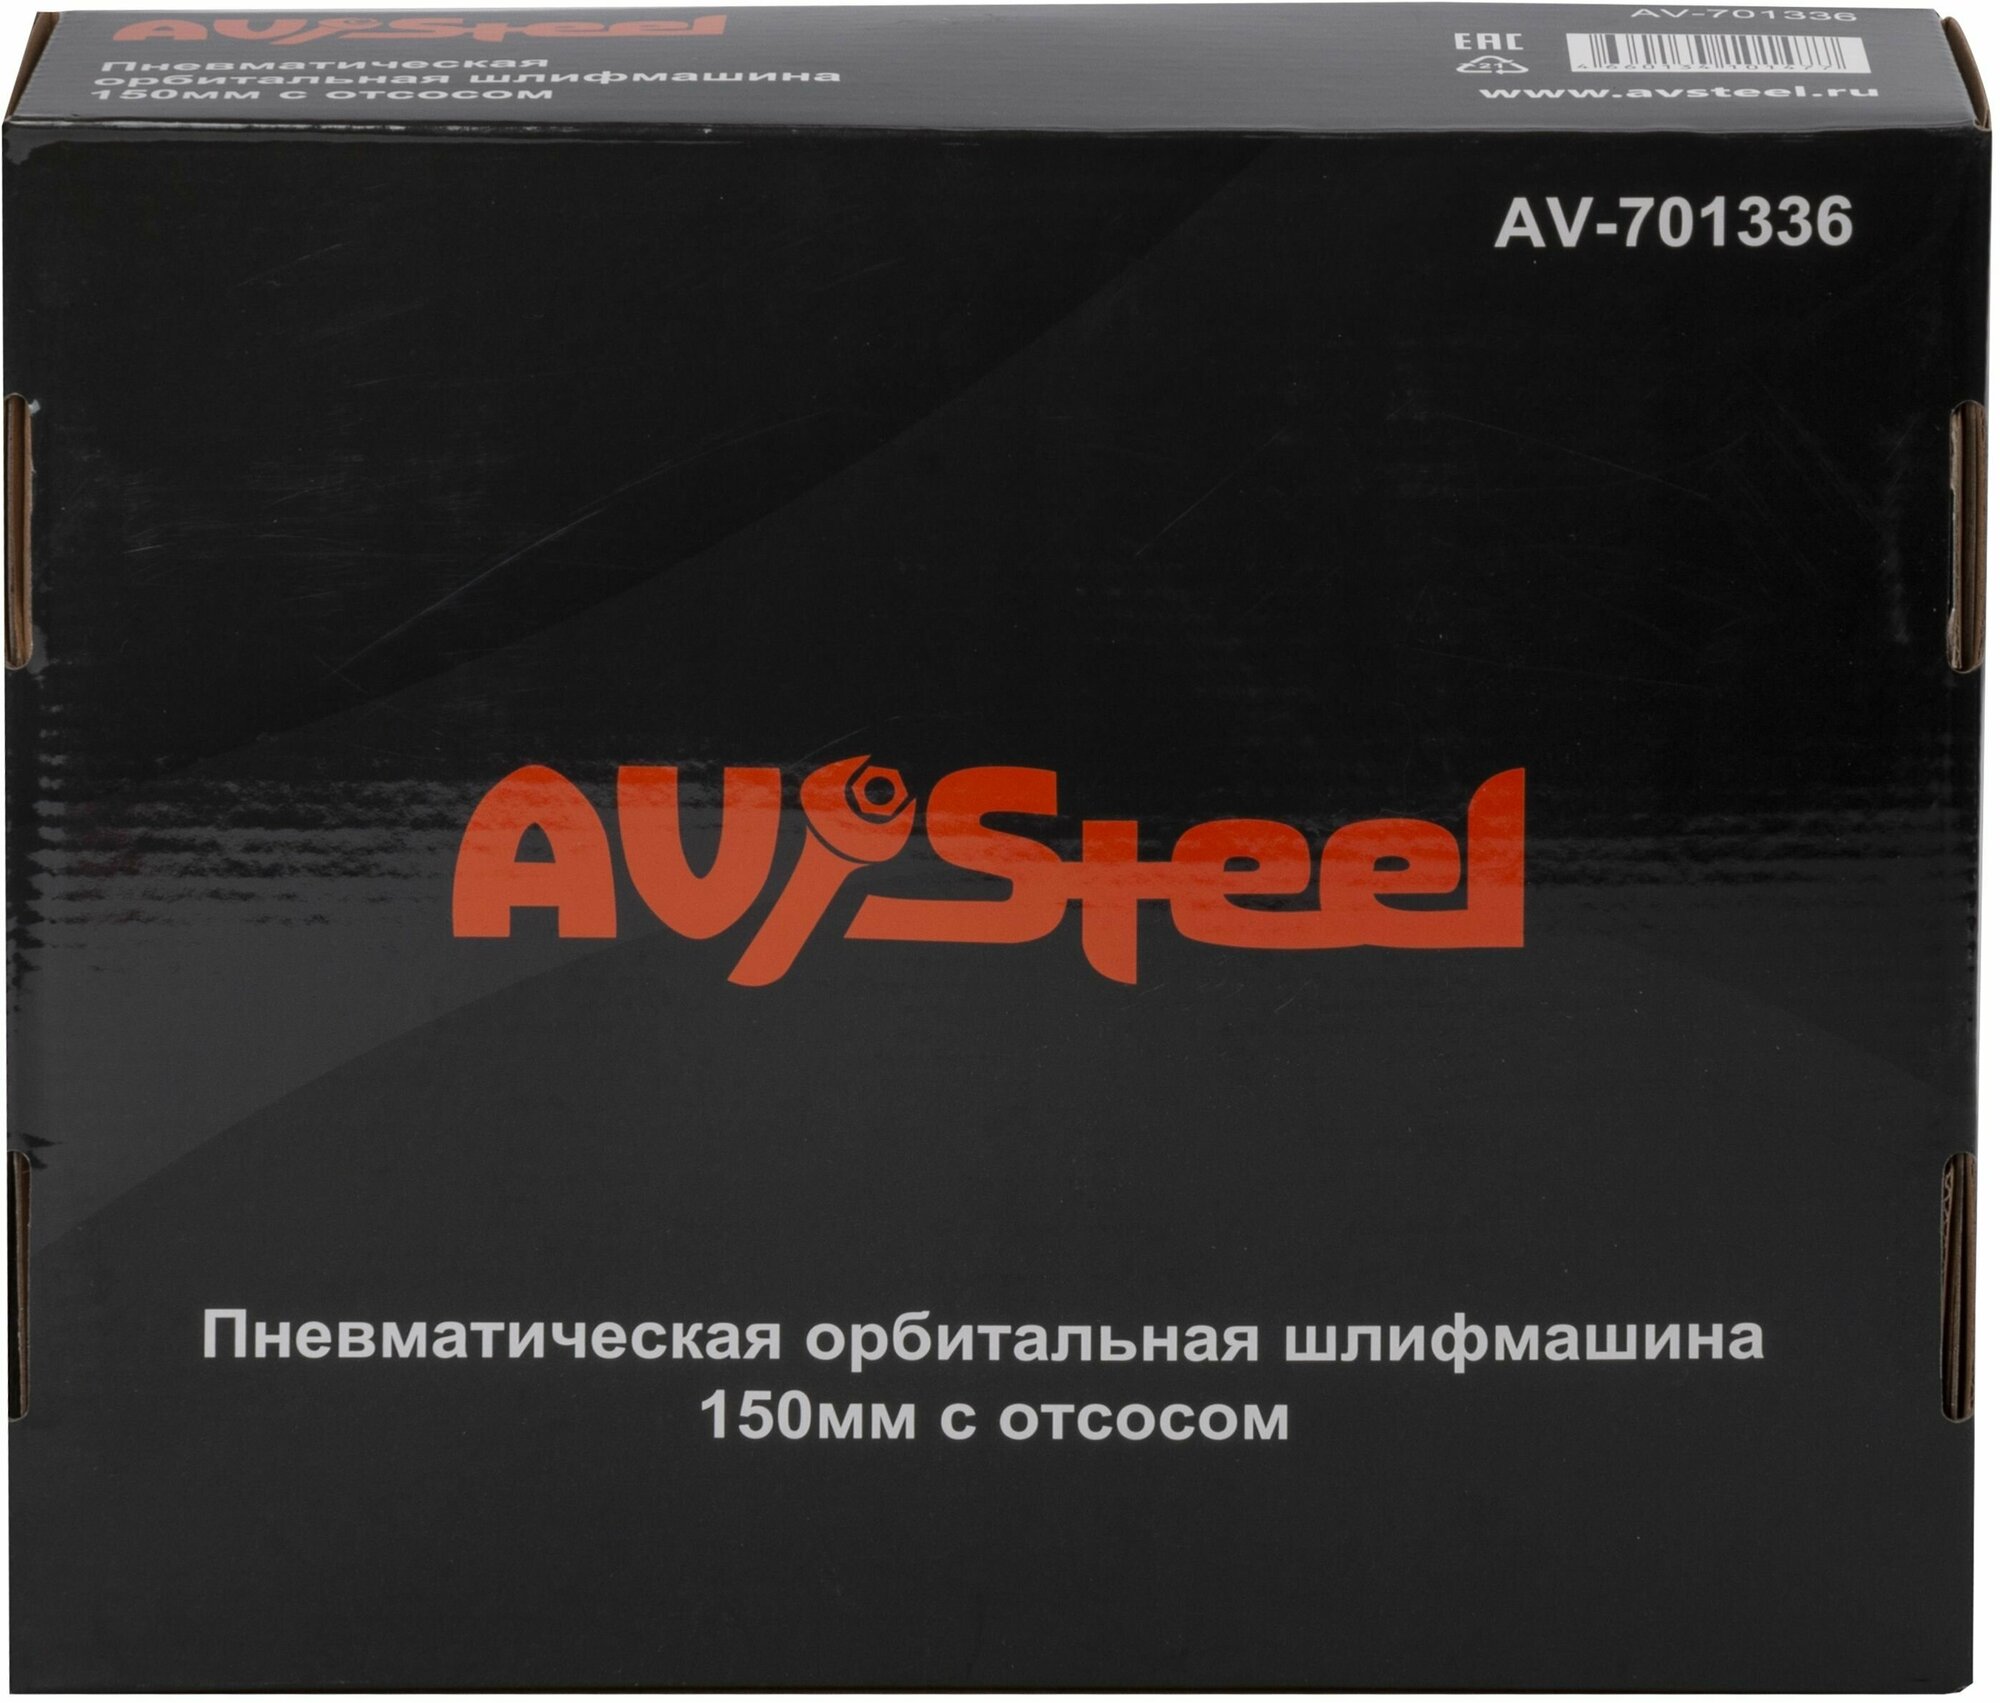 Шлифмашина AV Steel 150mm с отсосом AV-701336